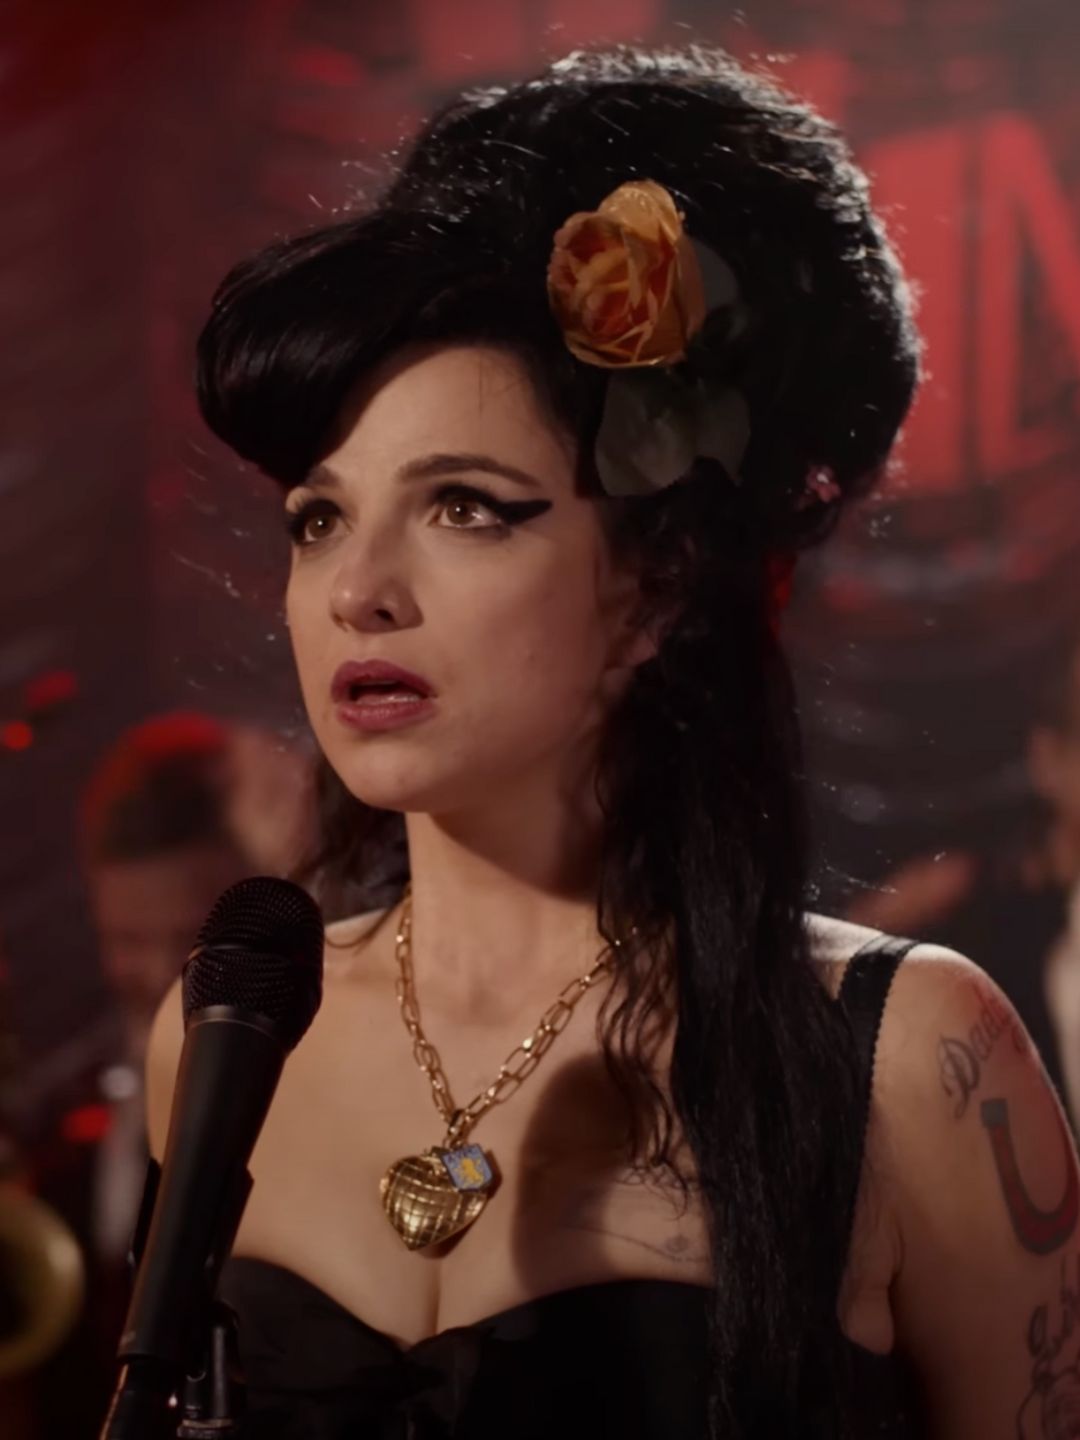 Marisa Abela plays Amy Winehouse in new biopic